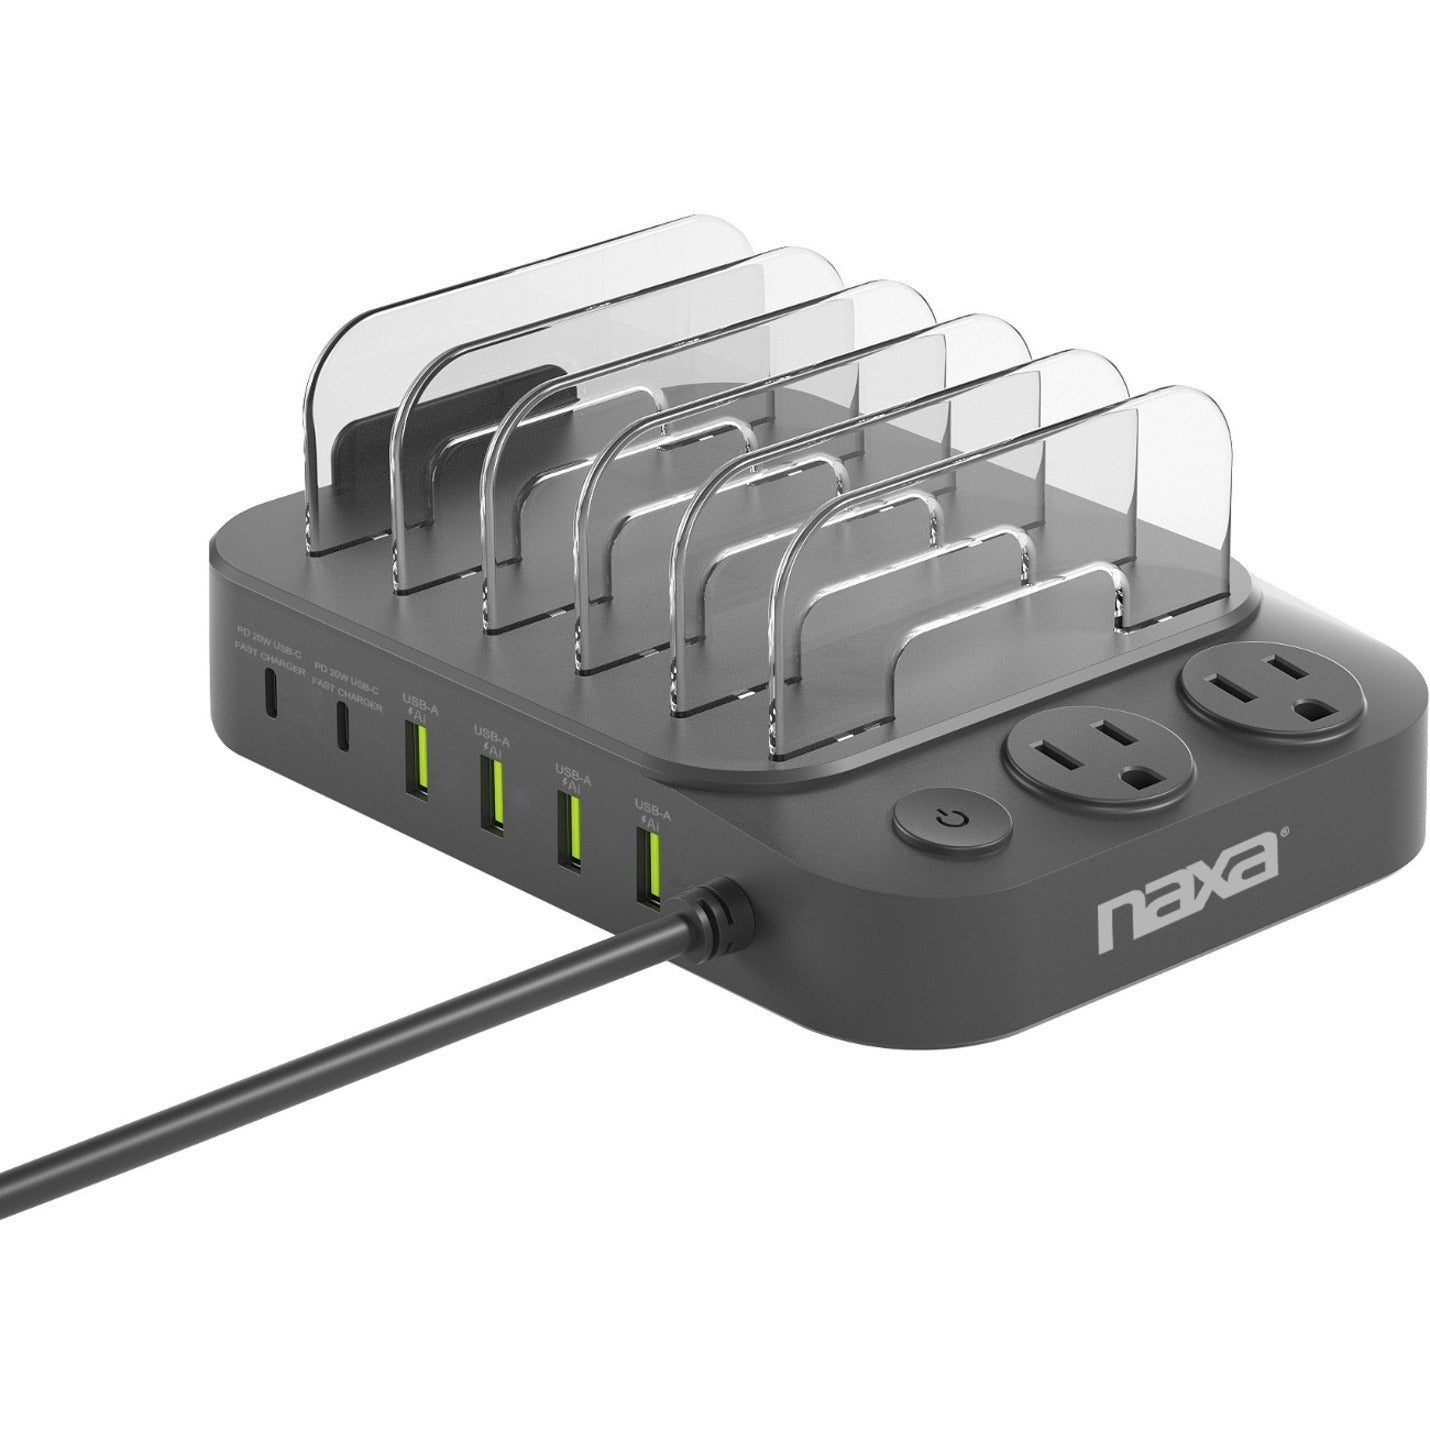 Naxa NAP-5001 8-in-1 Charging Station, USB Type C, 6 USB Ports, 1 Year Warranty